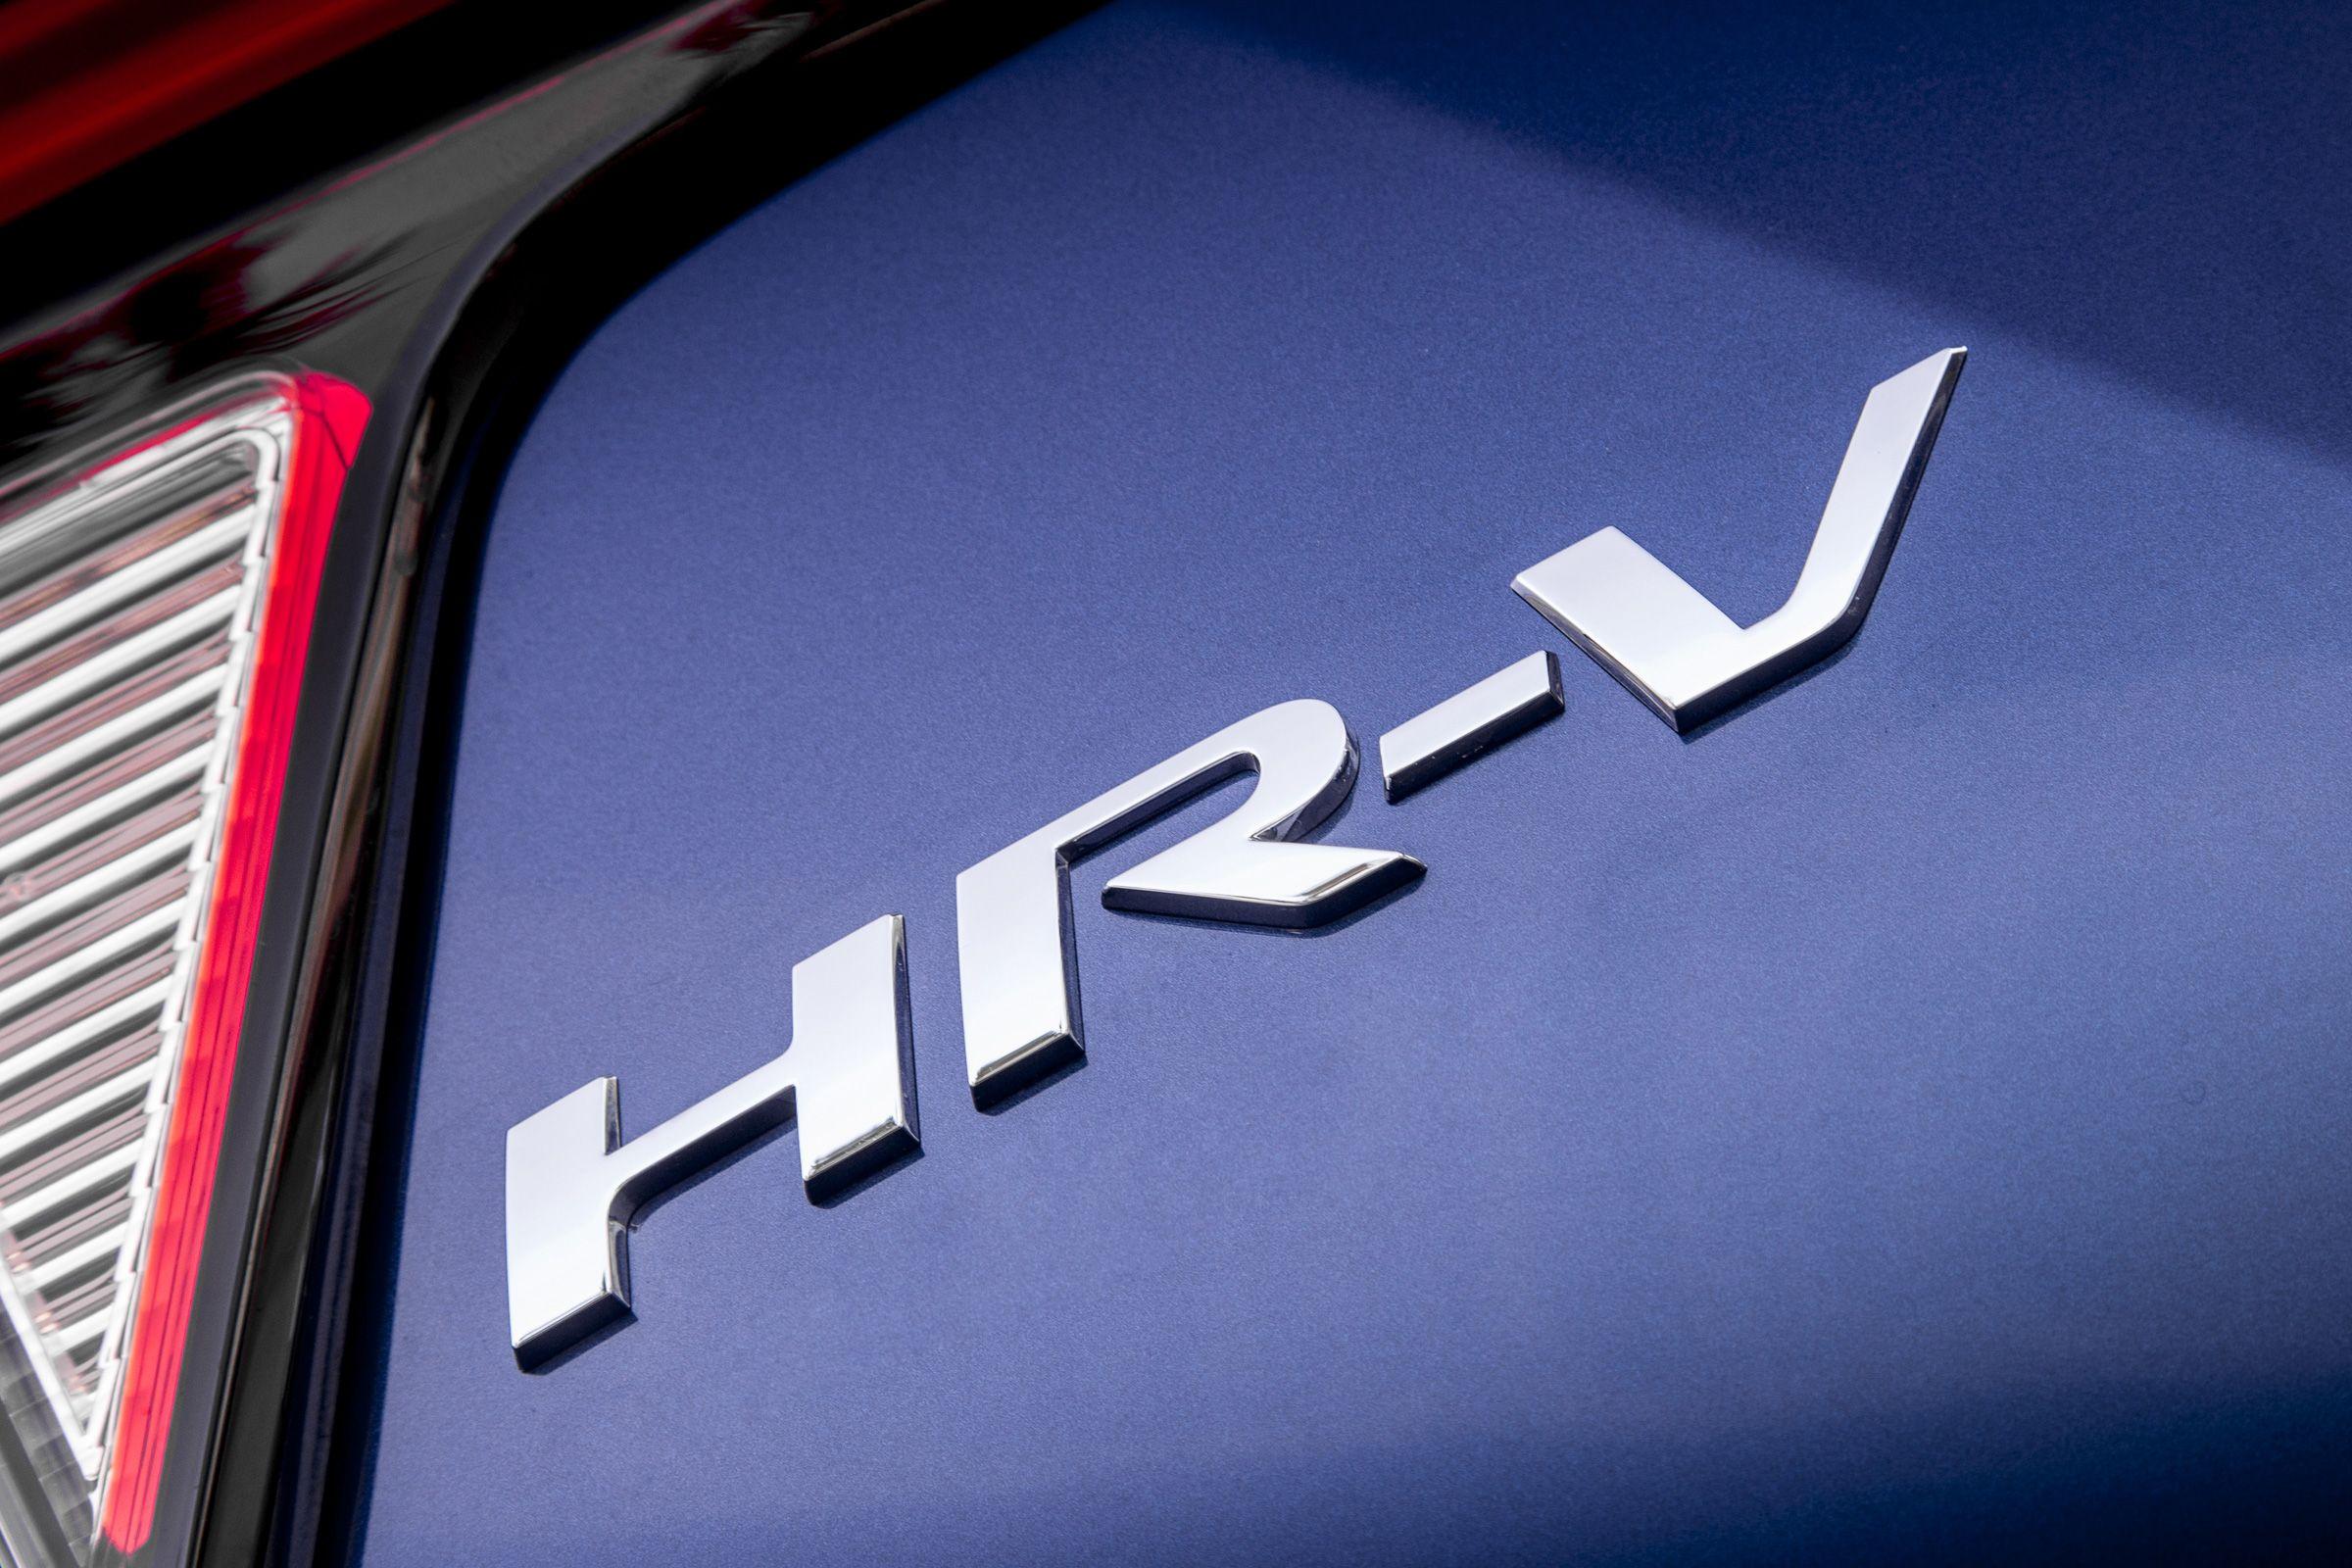 Honda HR-V Logo - Honda HR-V SUV 2015 pictures | Carbuyer